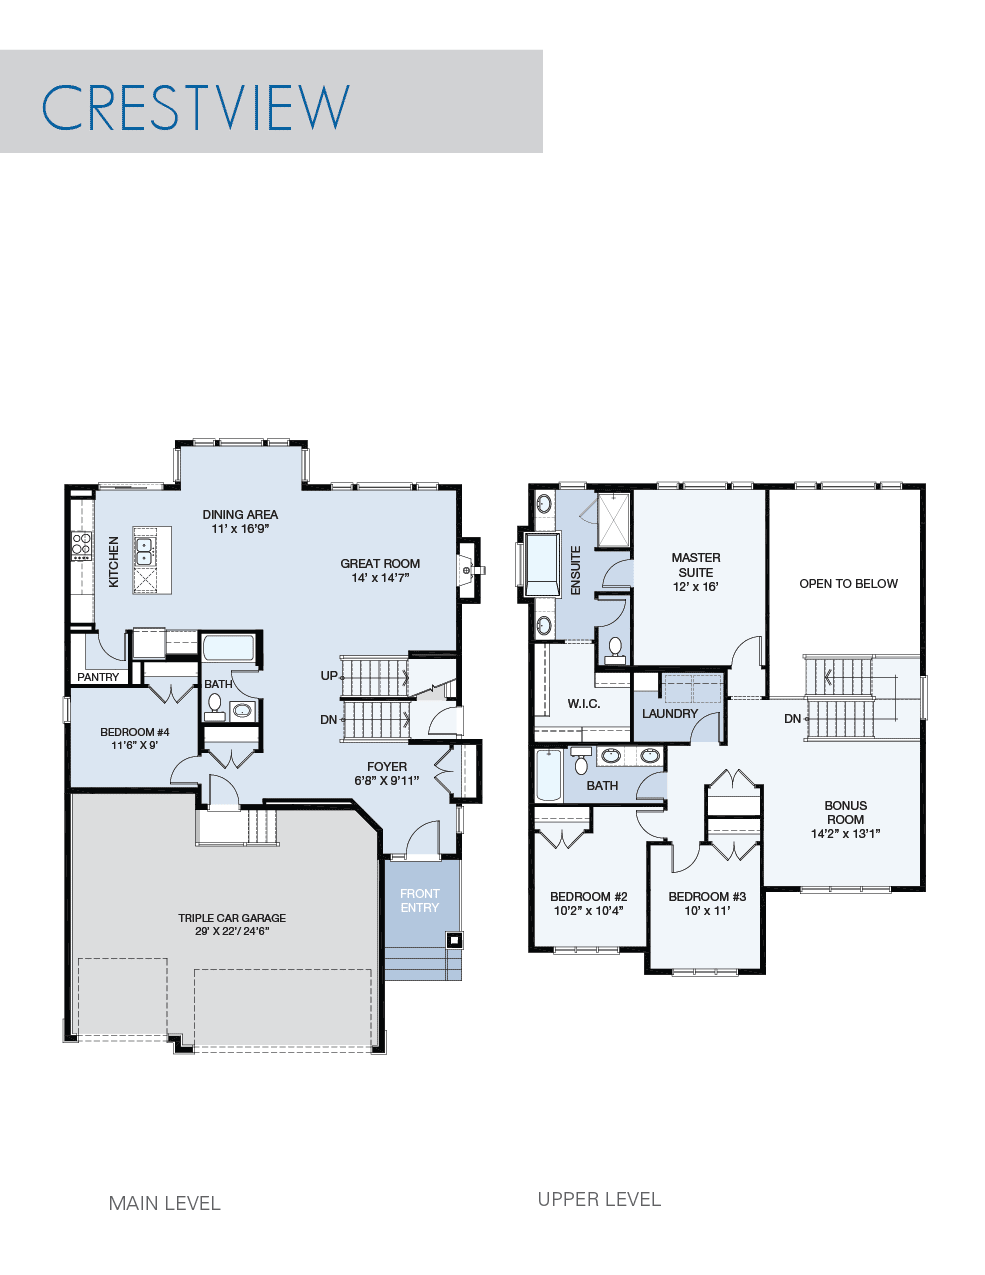 Crestview floorplan